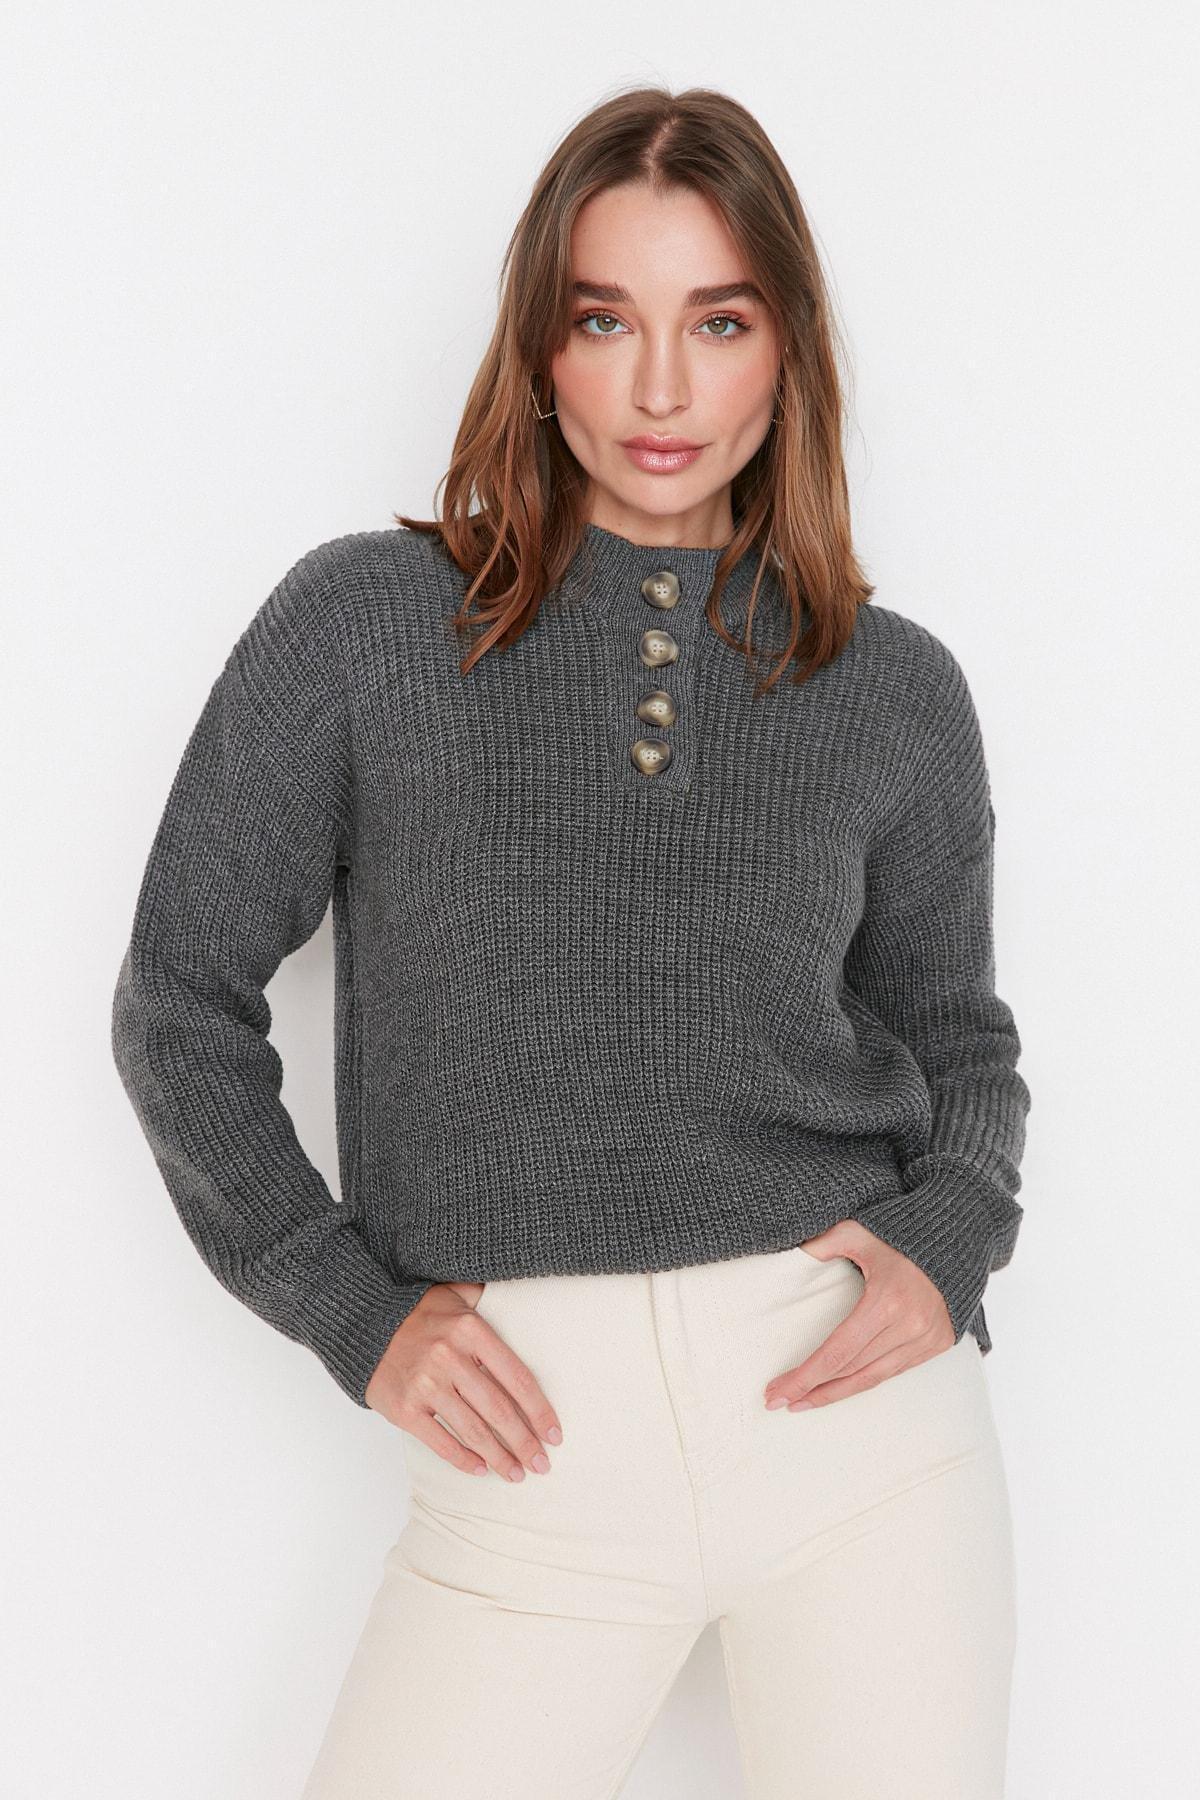 Trendyol - Gray Plain Sweater